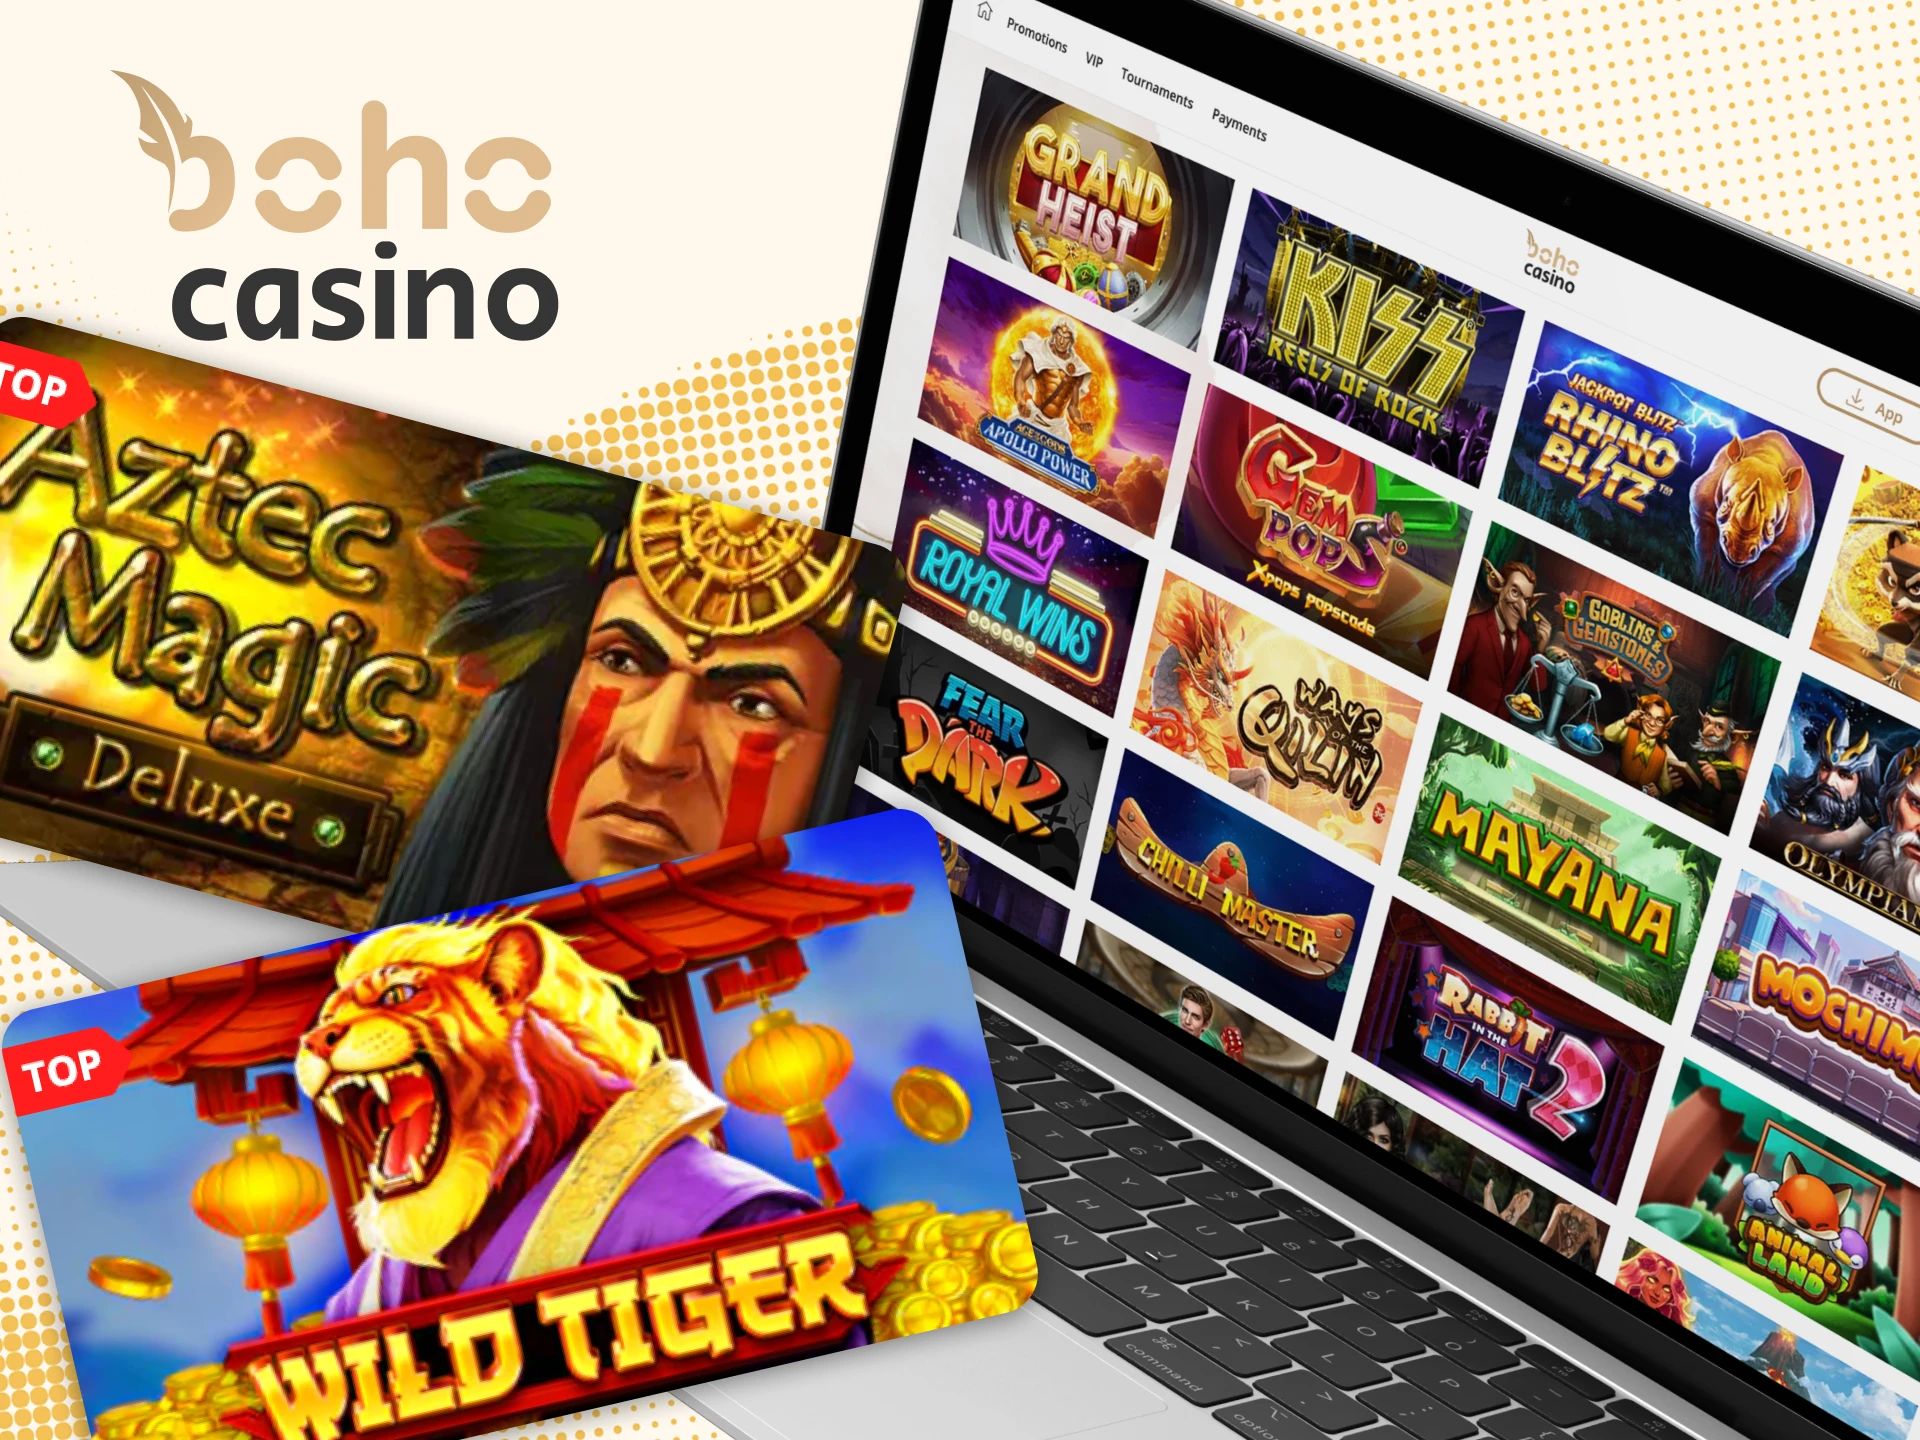 Boho Casino provides many popular slot games.